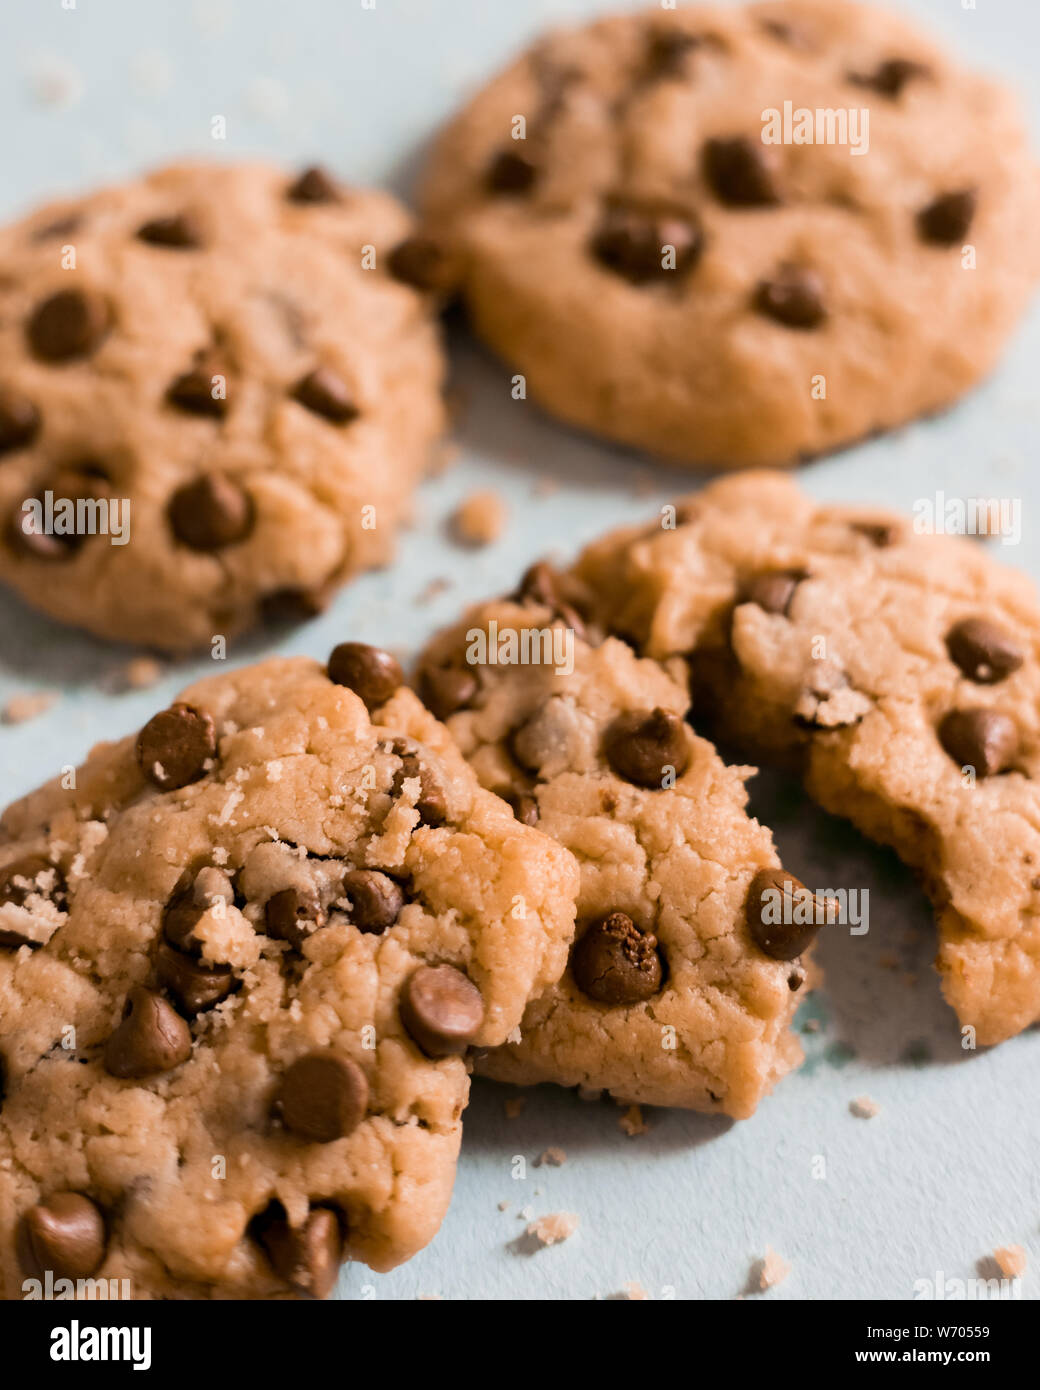 Choco crisp cookies / galletas con chispas de chocolate / chococrisp galletas reposteria dulces sweet Stock Photo